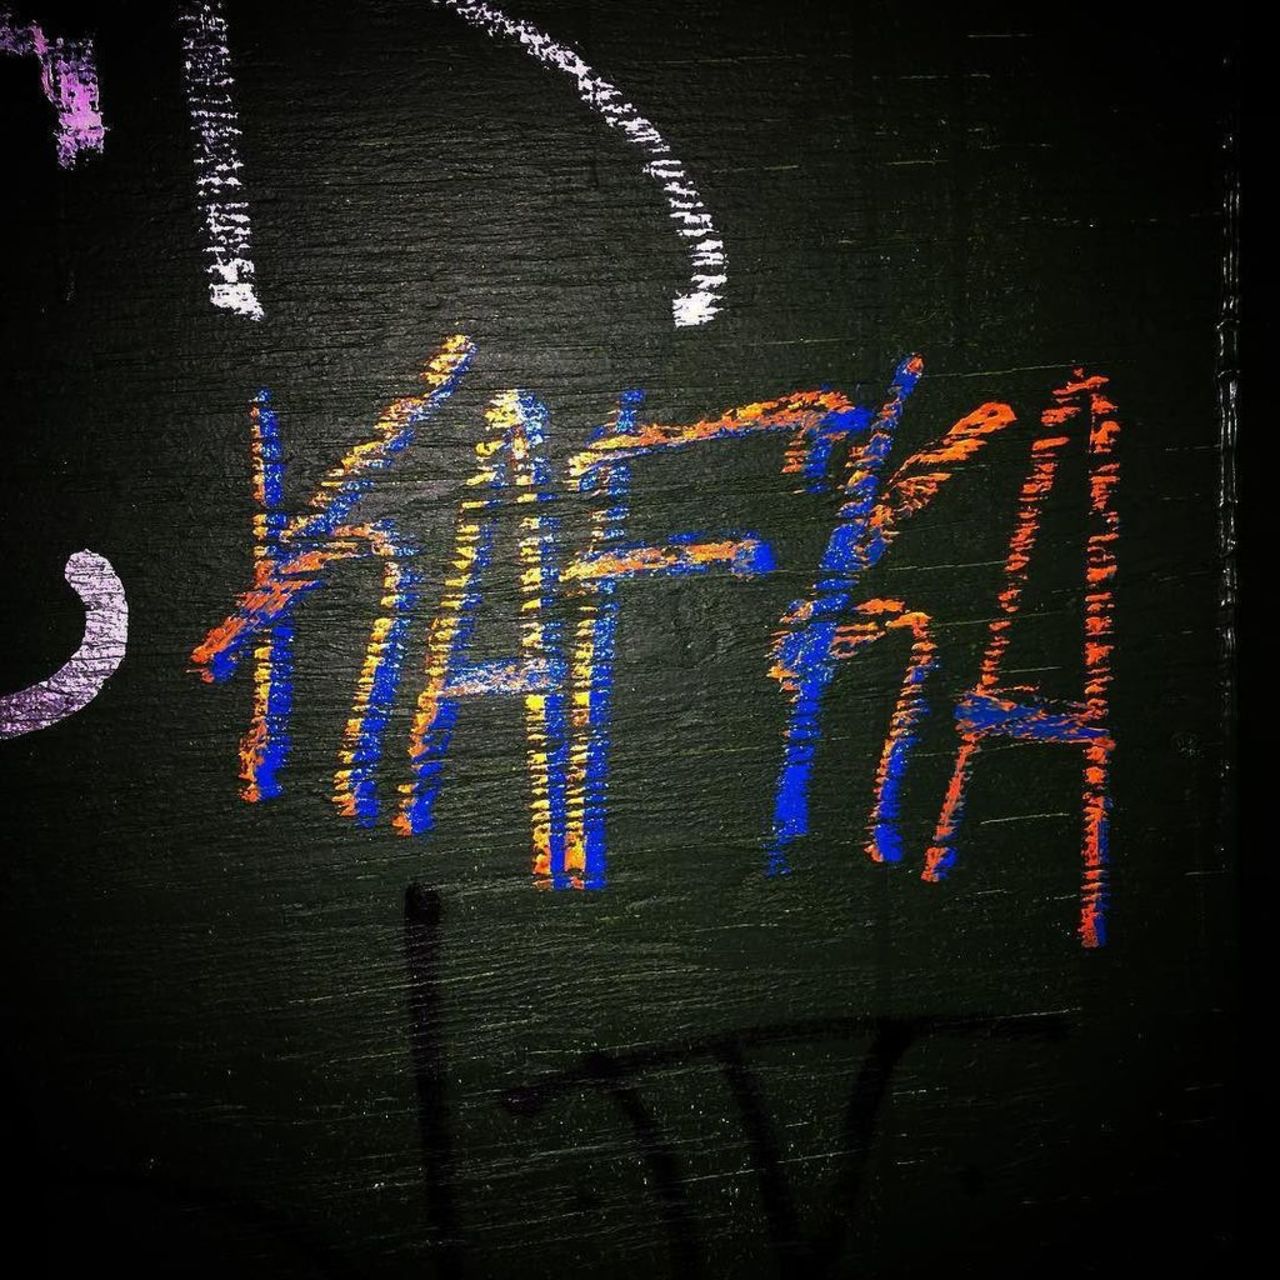 Reppin the #Mets! 
#kafkaisfamous #nycgraffiti #graffiti #streetart #nyc #losangeles #losfeliz #brooklyn #soho #str… https://t.co/VjPyiTqhFx